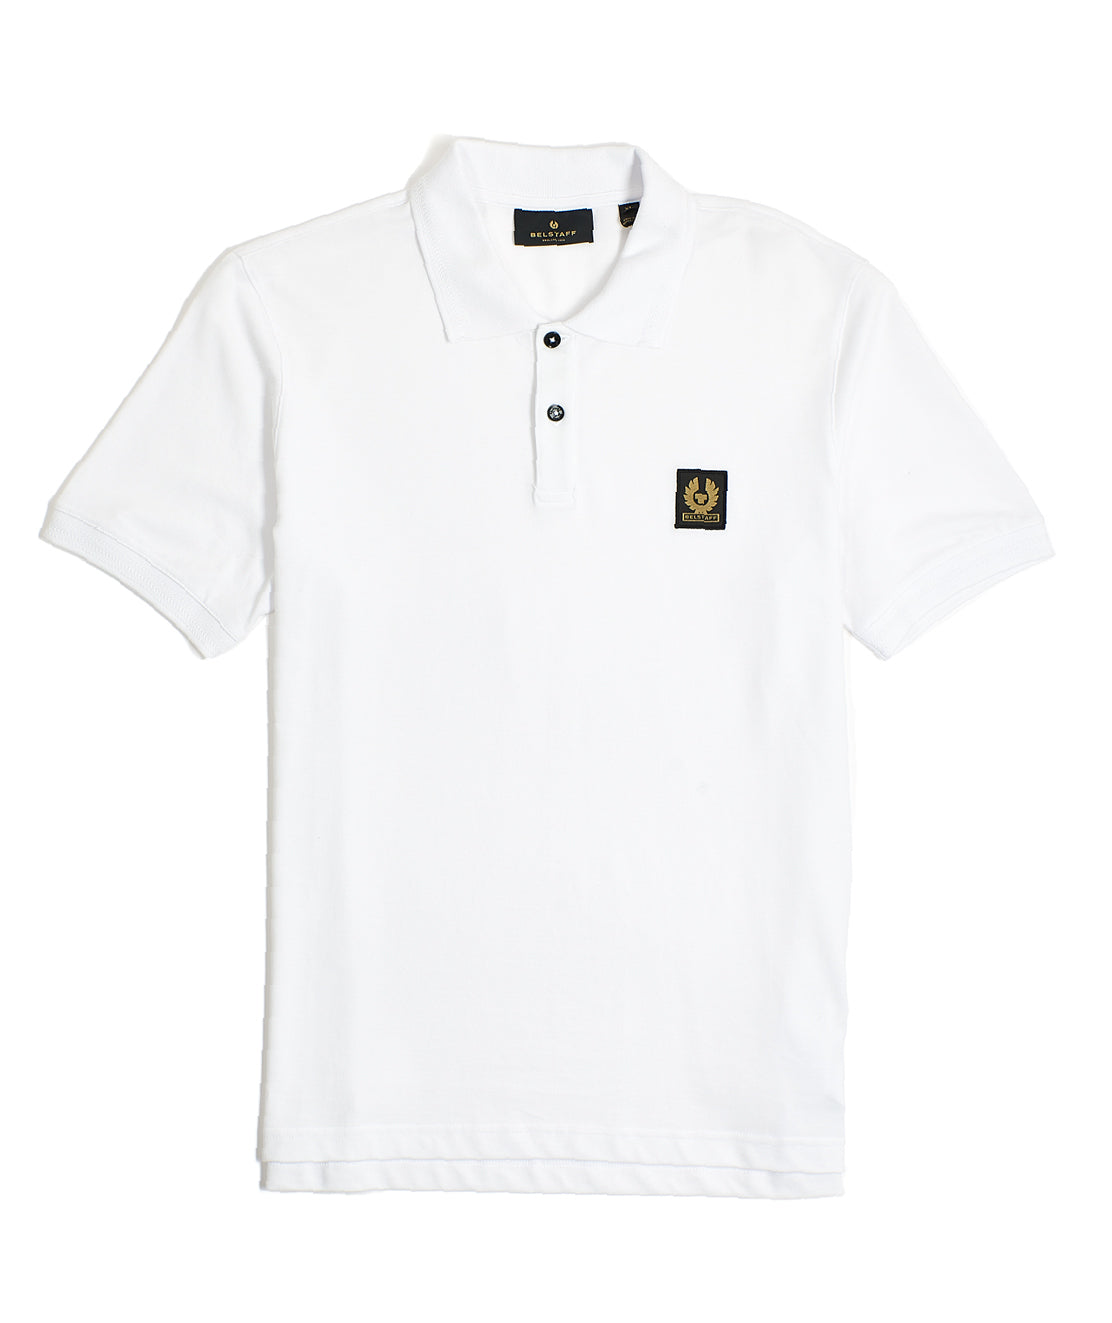 Small white Ss Polo T Shirt